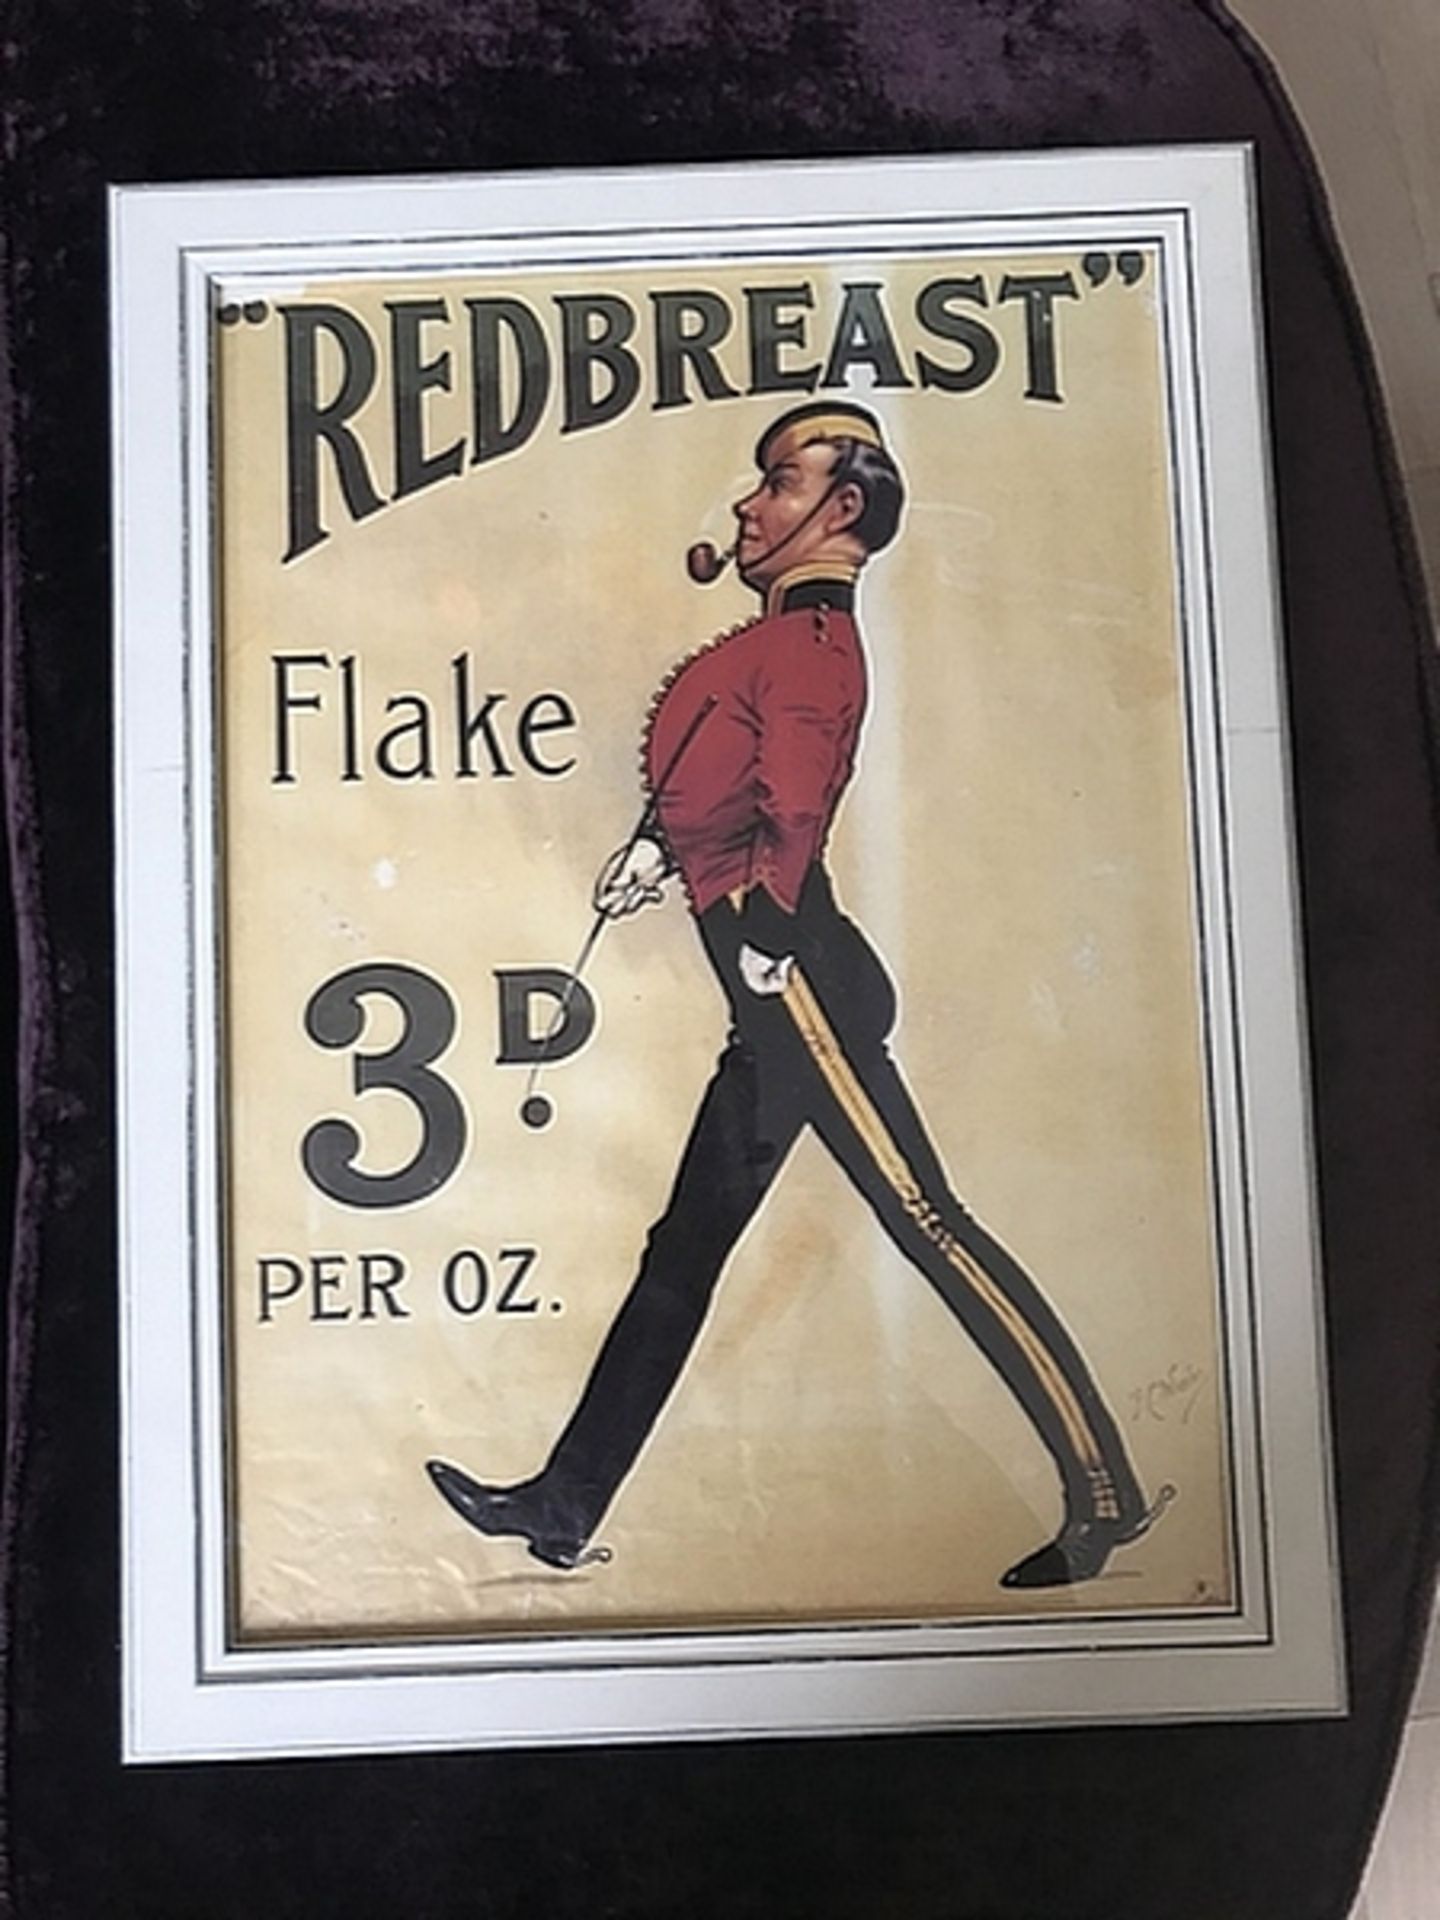 Redbreast Flake 3 D